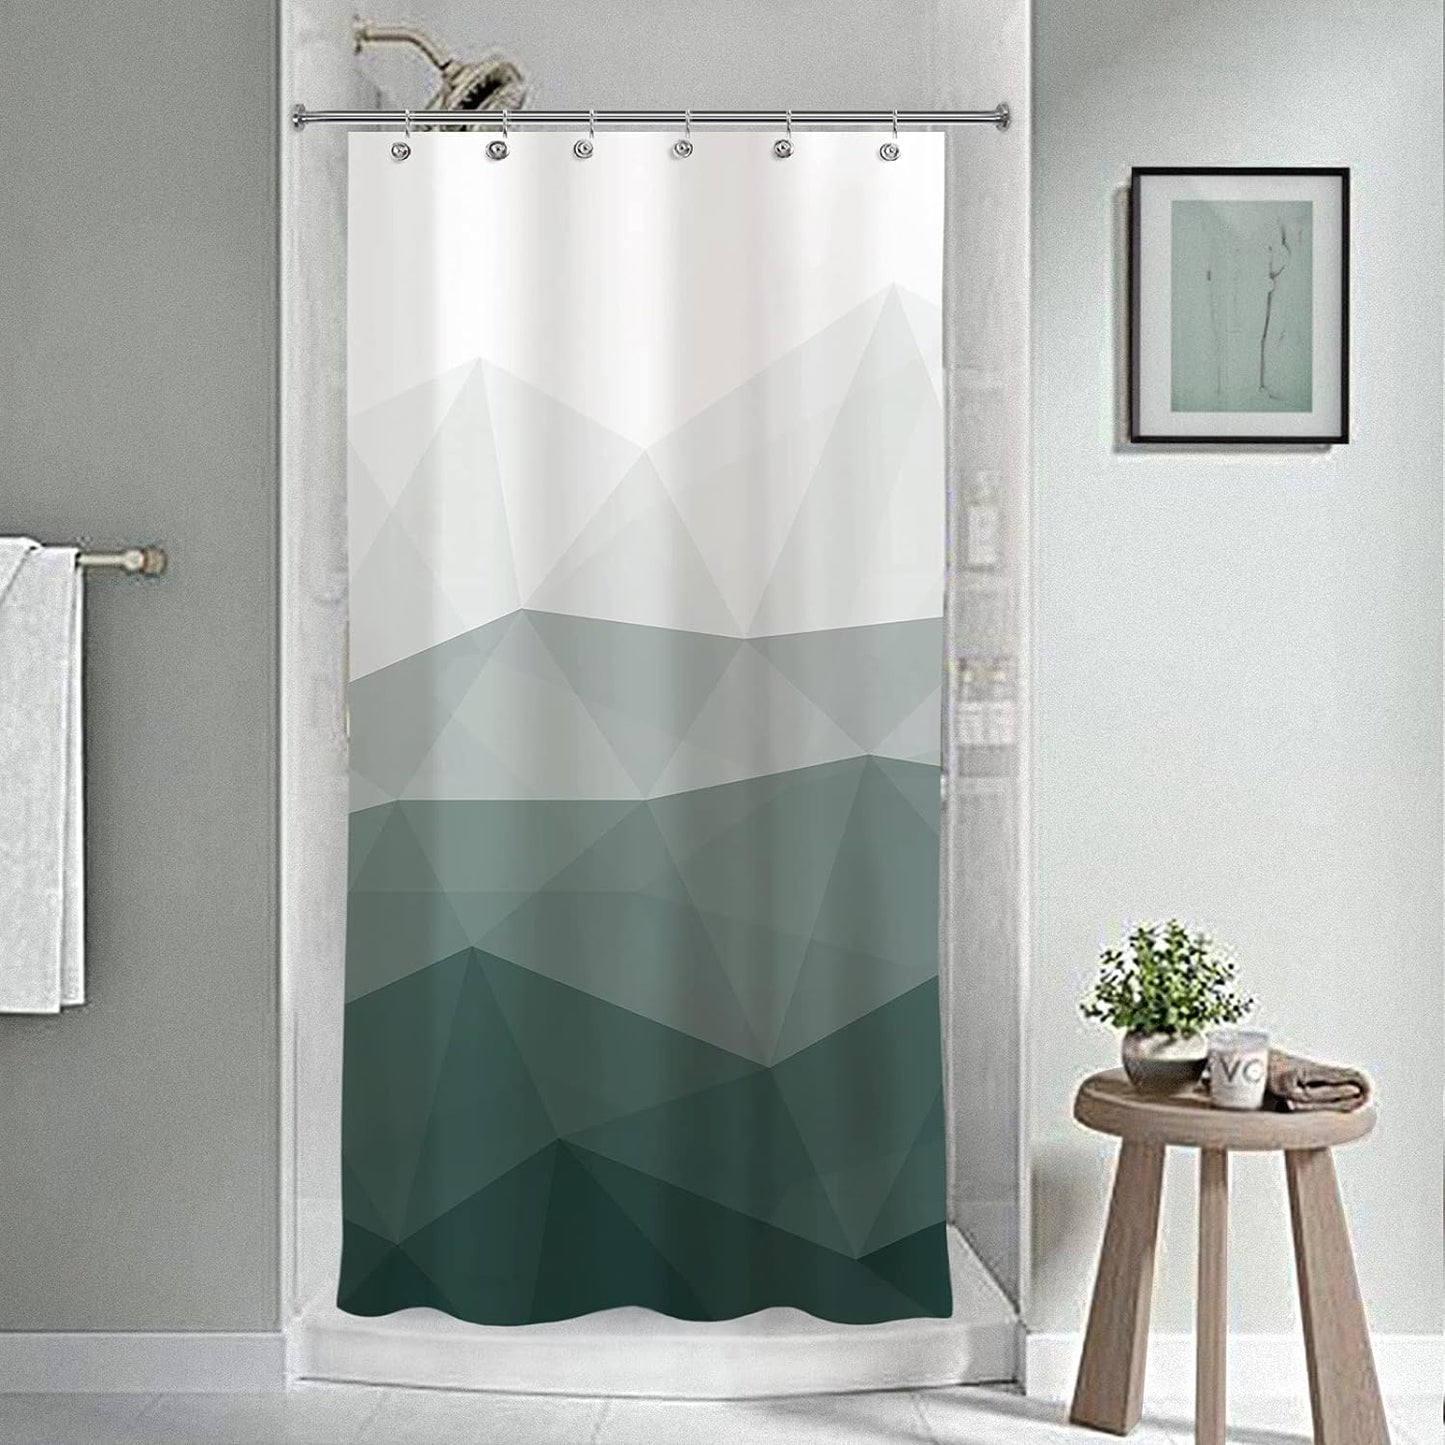 Sunlit Designer Popular Shower Curtain, Ombre Blue Fabric Contemporary Shower Curtains for Bathroom Décor